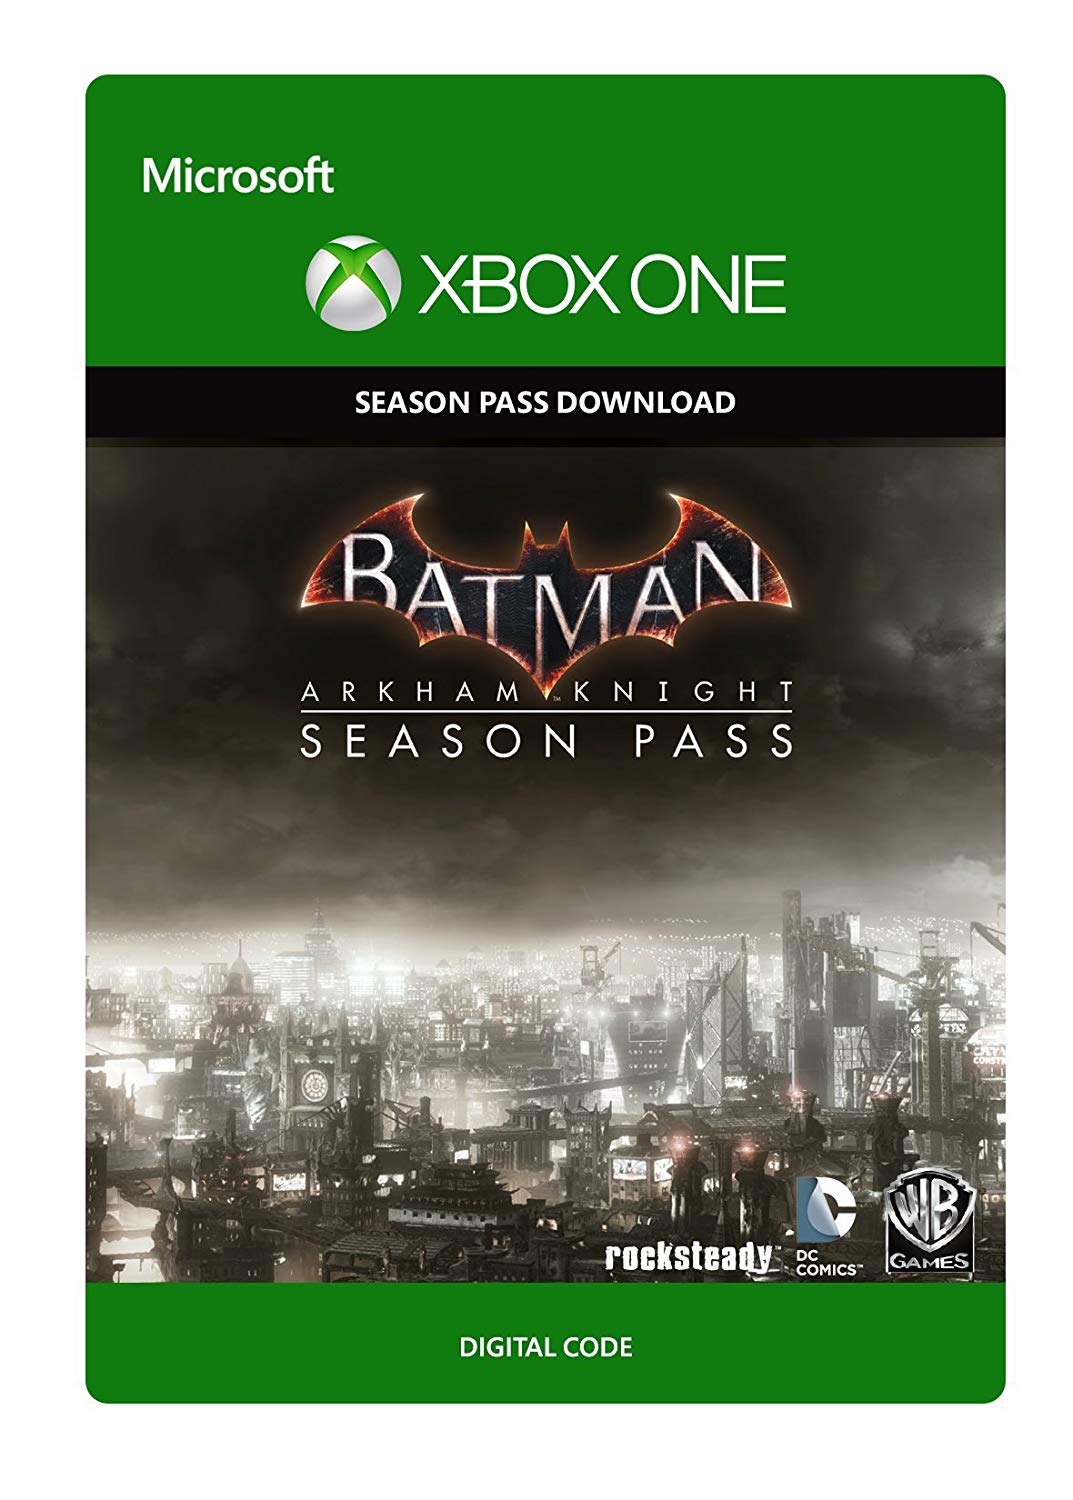 Batman Arkham Knight Season Pass CD Key for Xbox One (Digital Download)